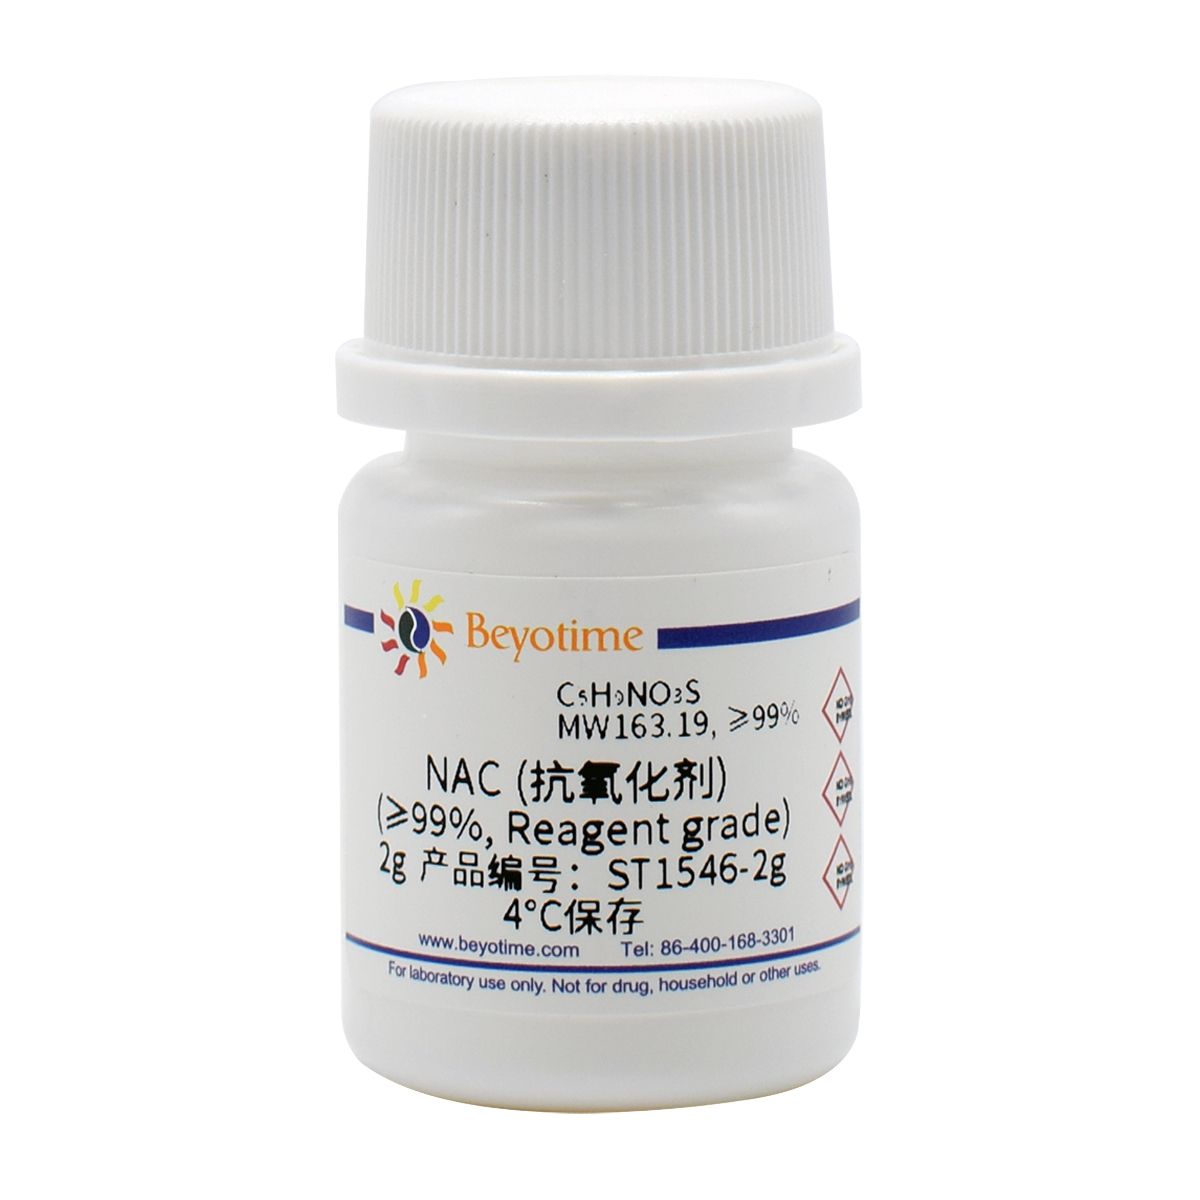 NAC (抗氧化剂) (≥99%, Reagent grade)